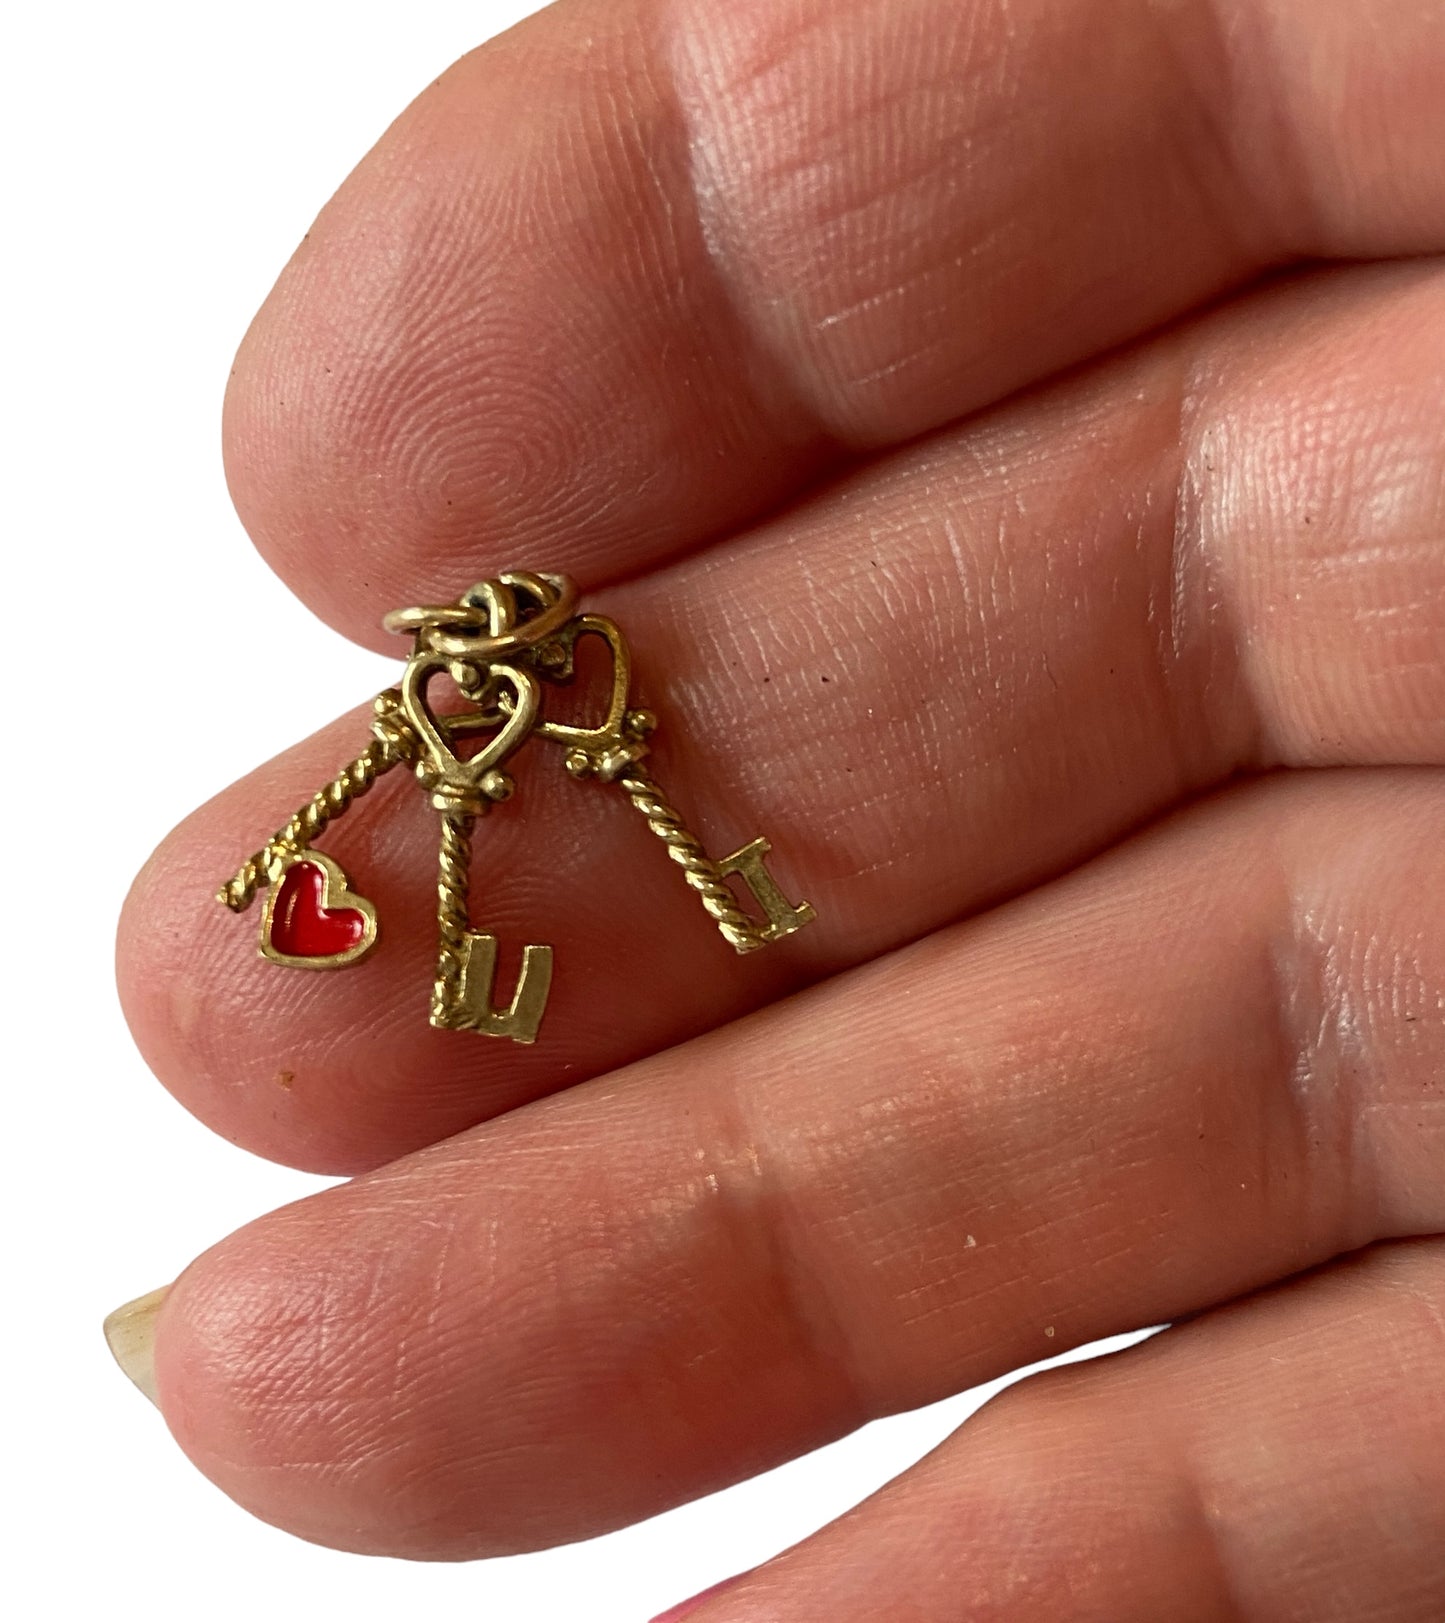 9ct vintage keys with 'I love you' charm / pendant